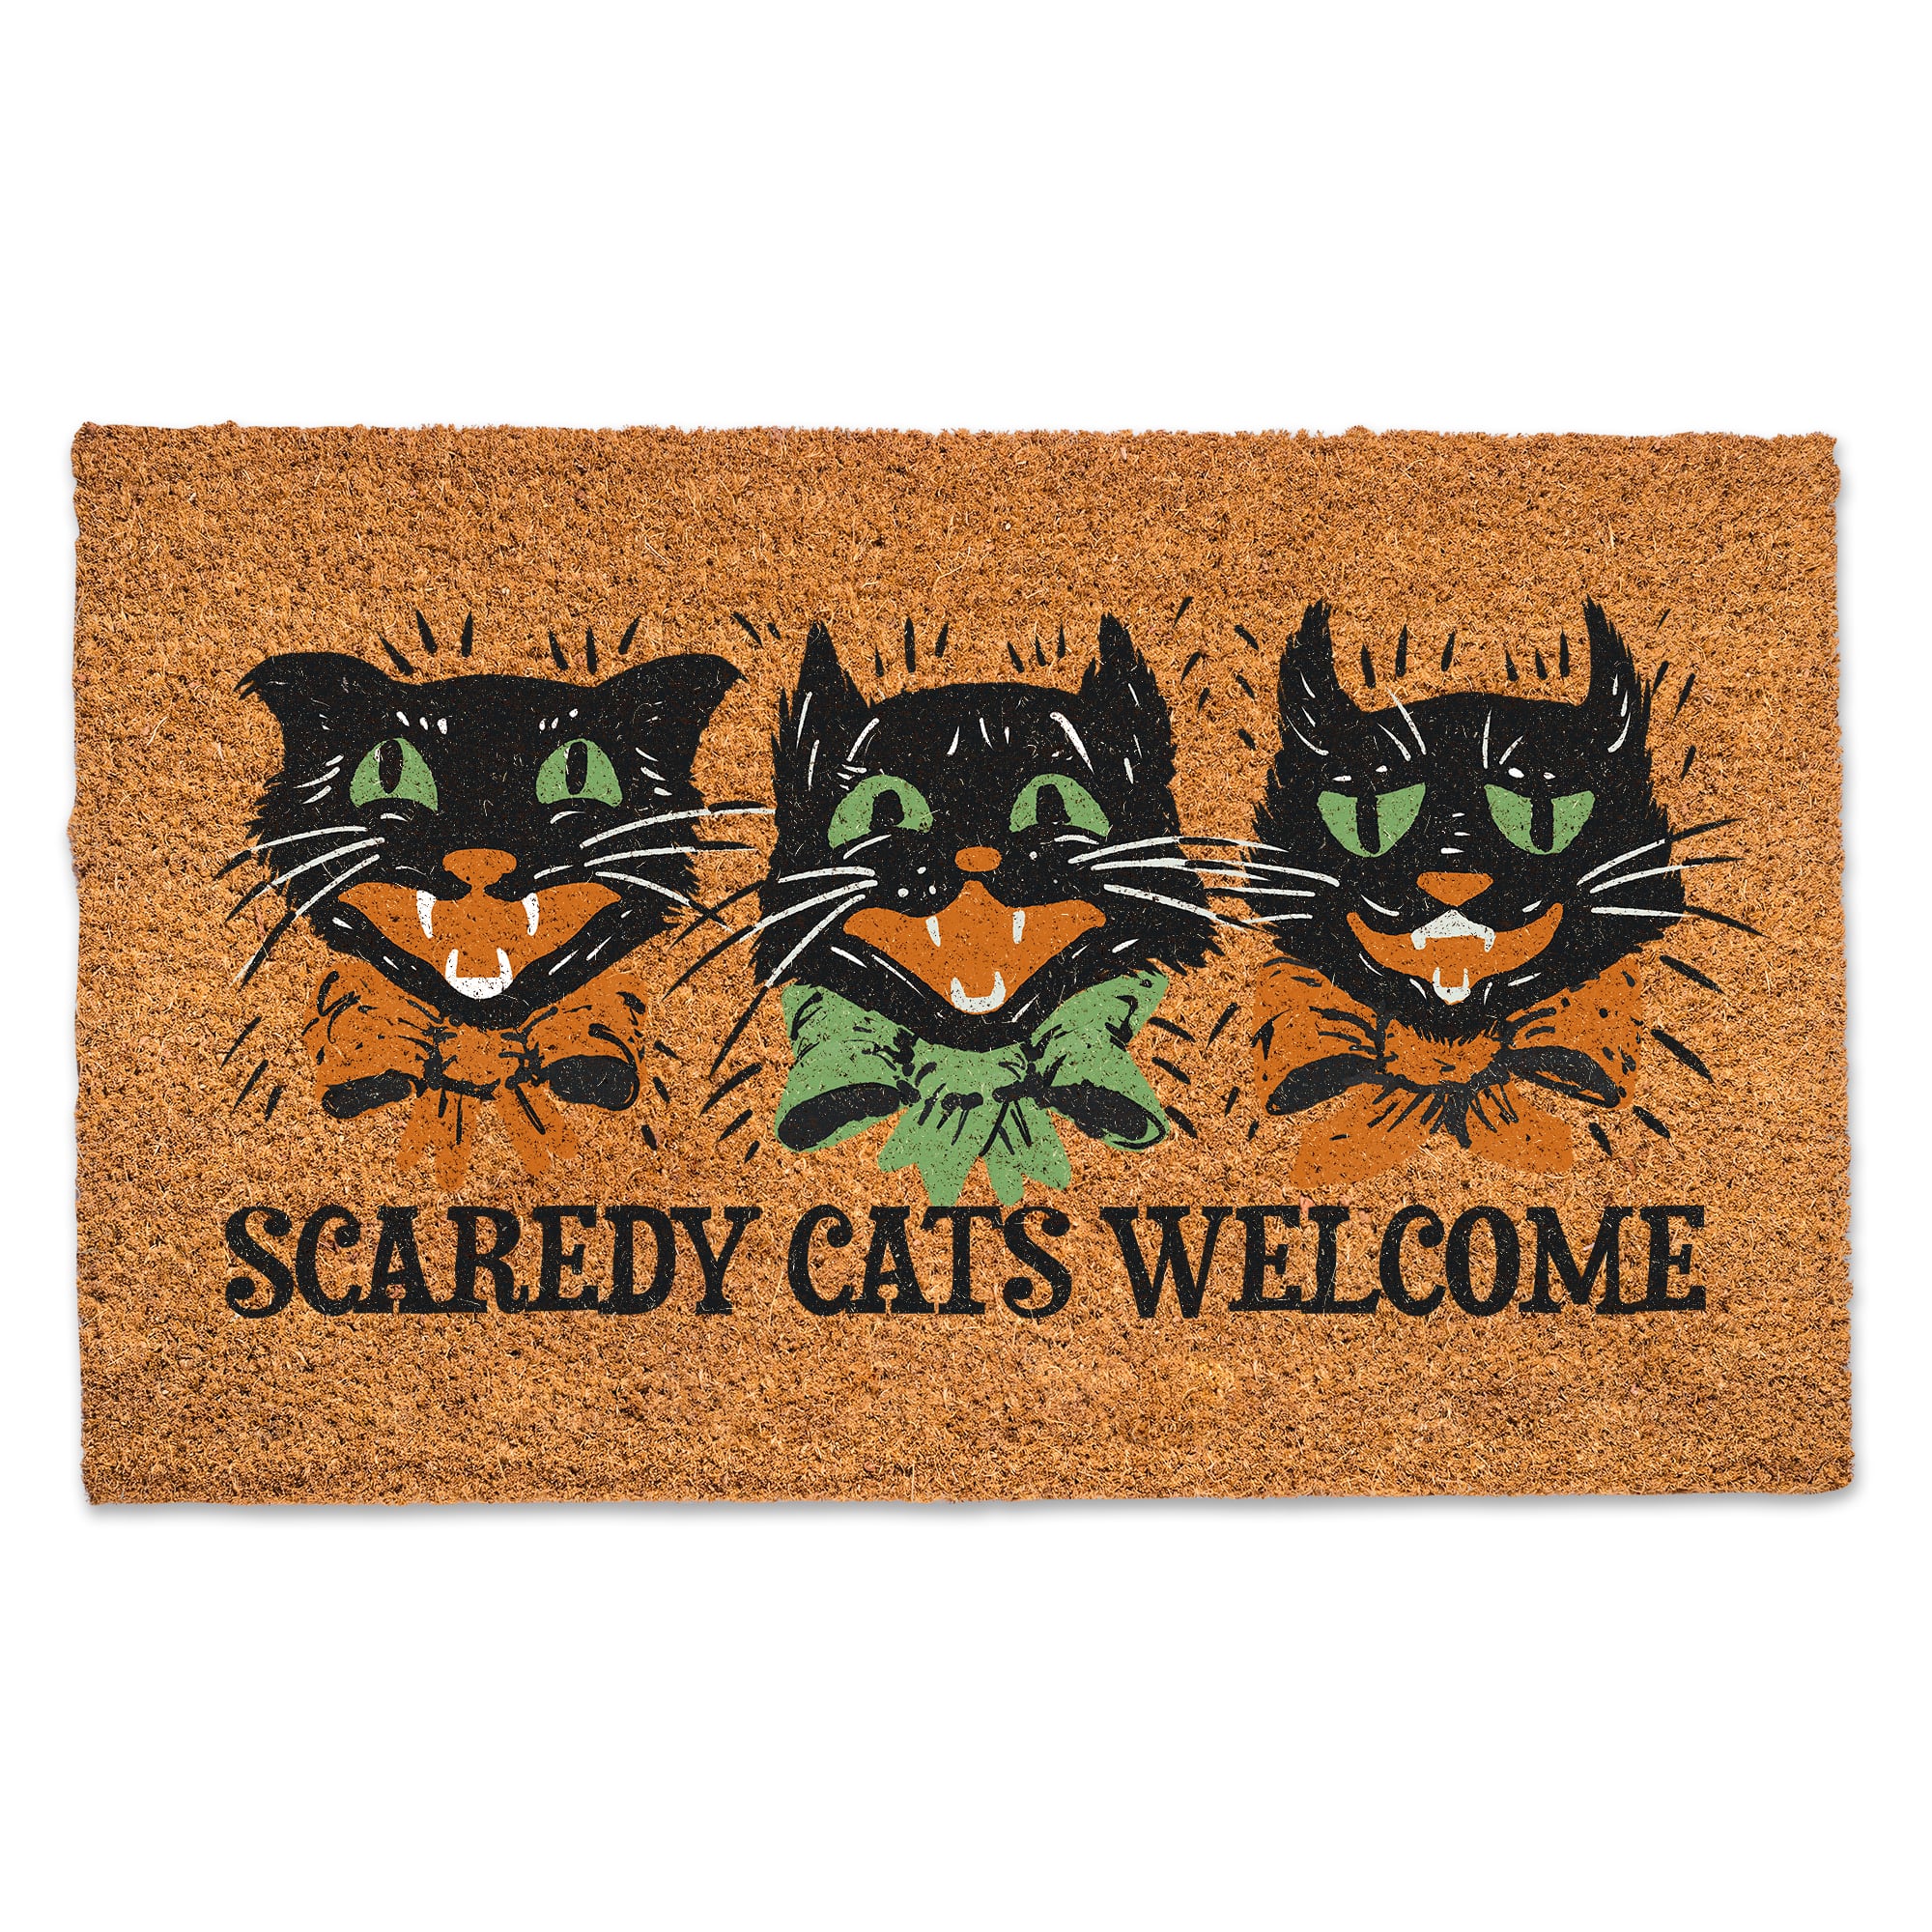 SCAREDY-CATS